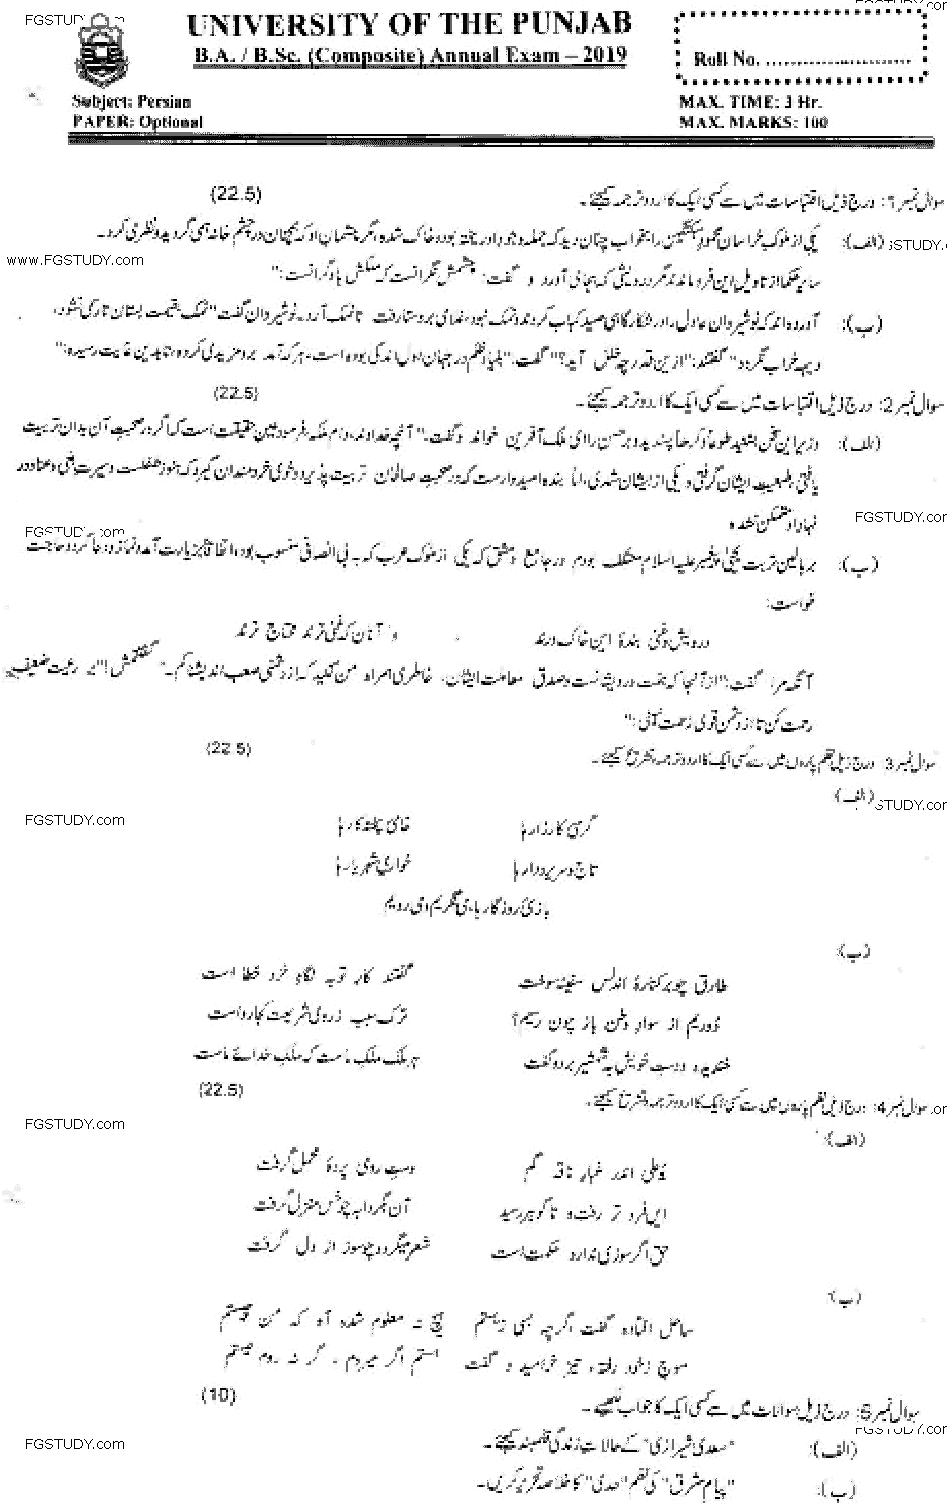 Ba Persian Optional Past Paper 2019 Punjab University